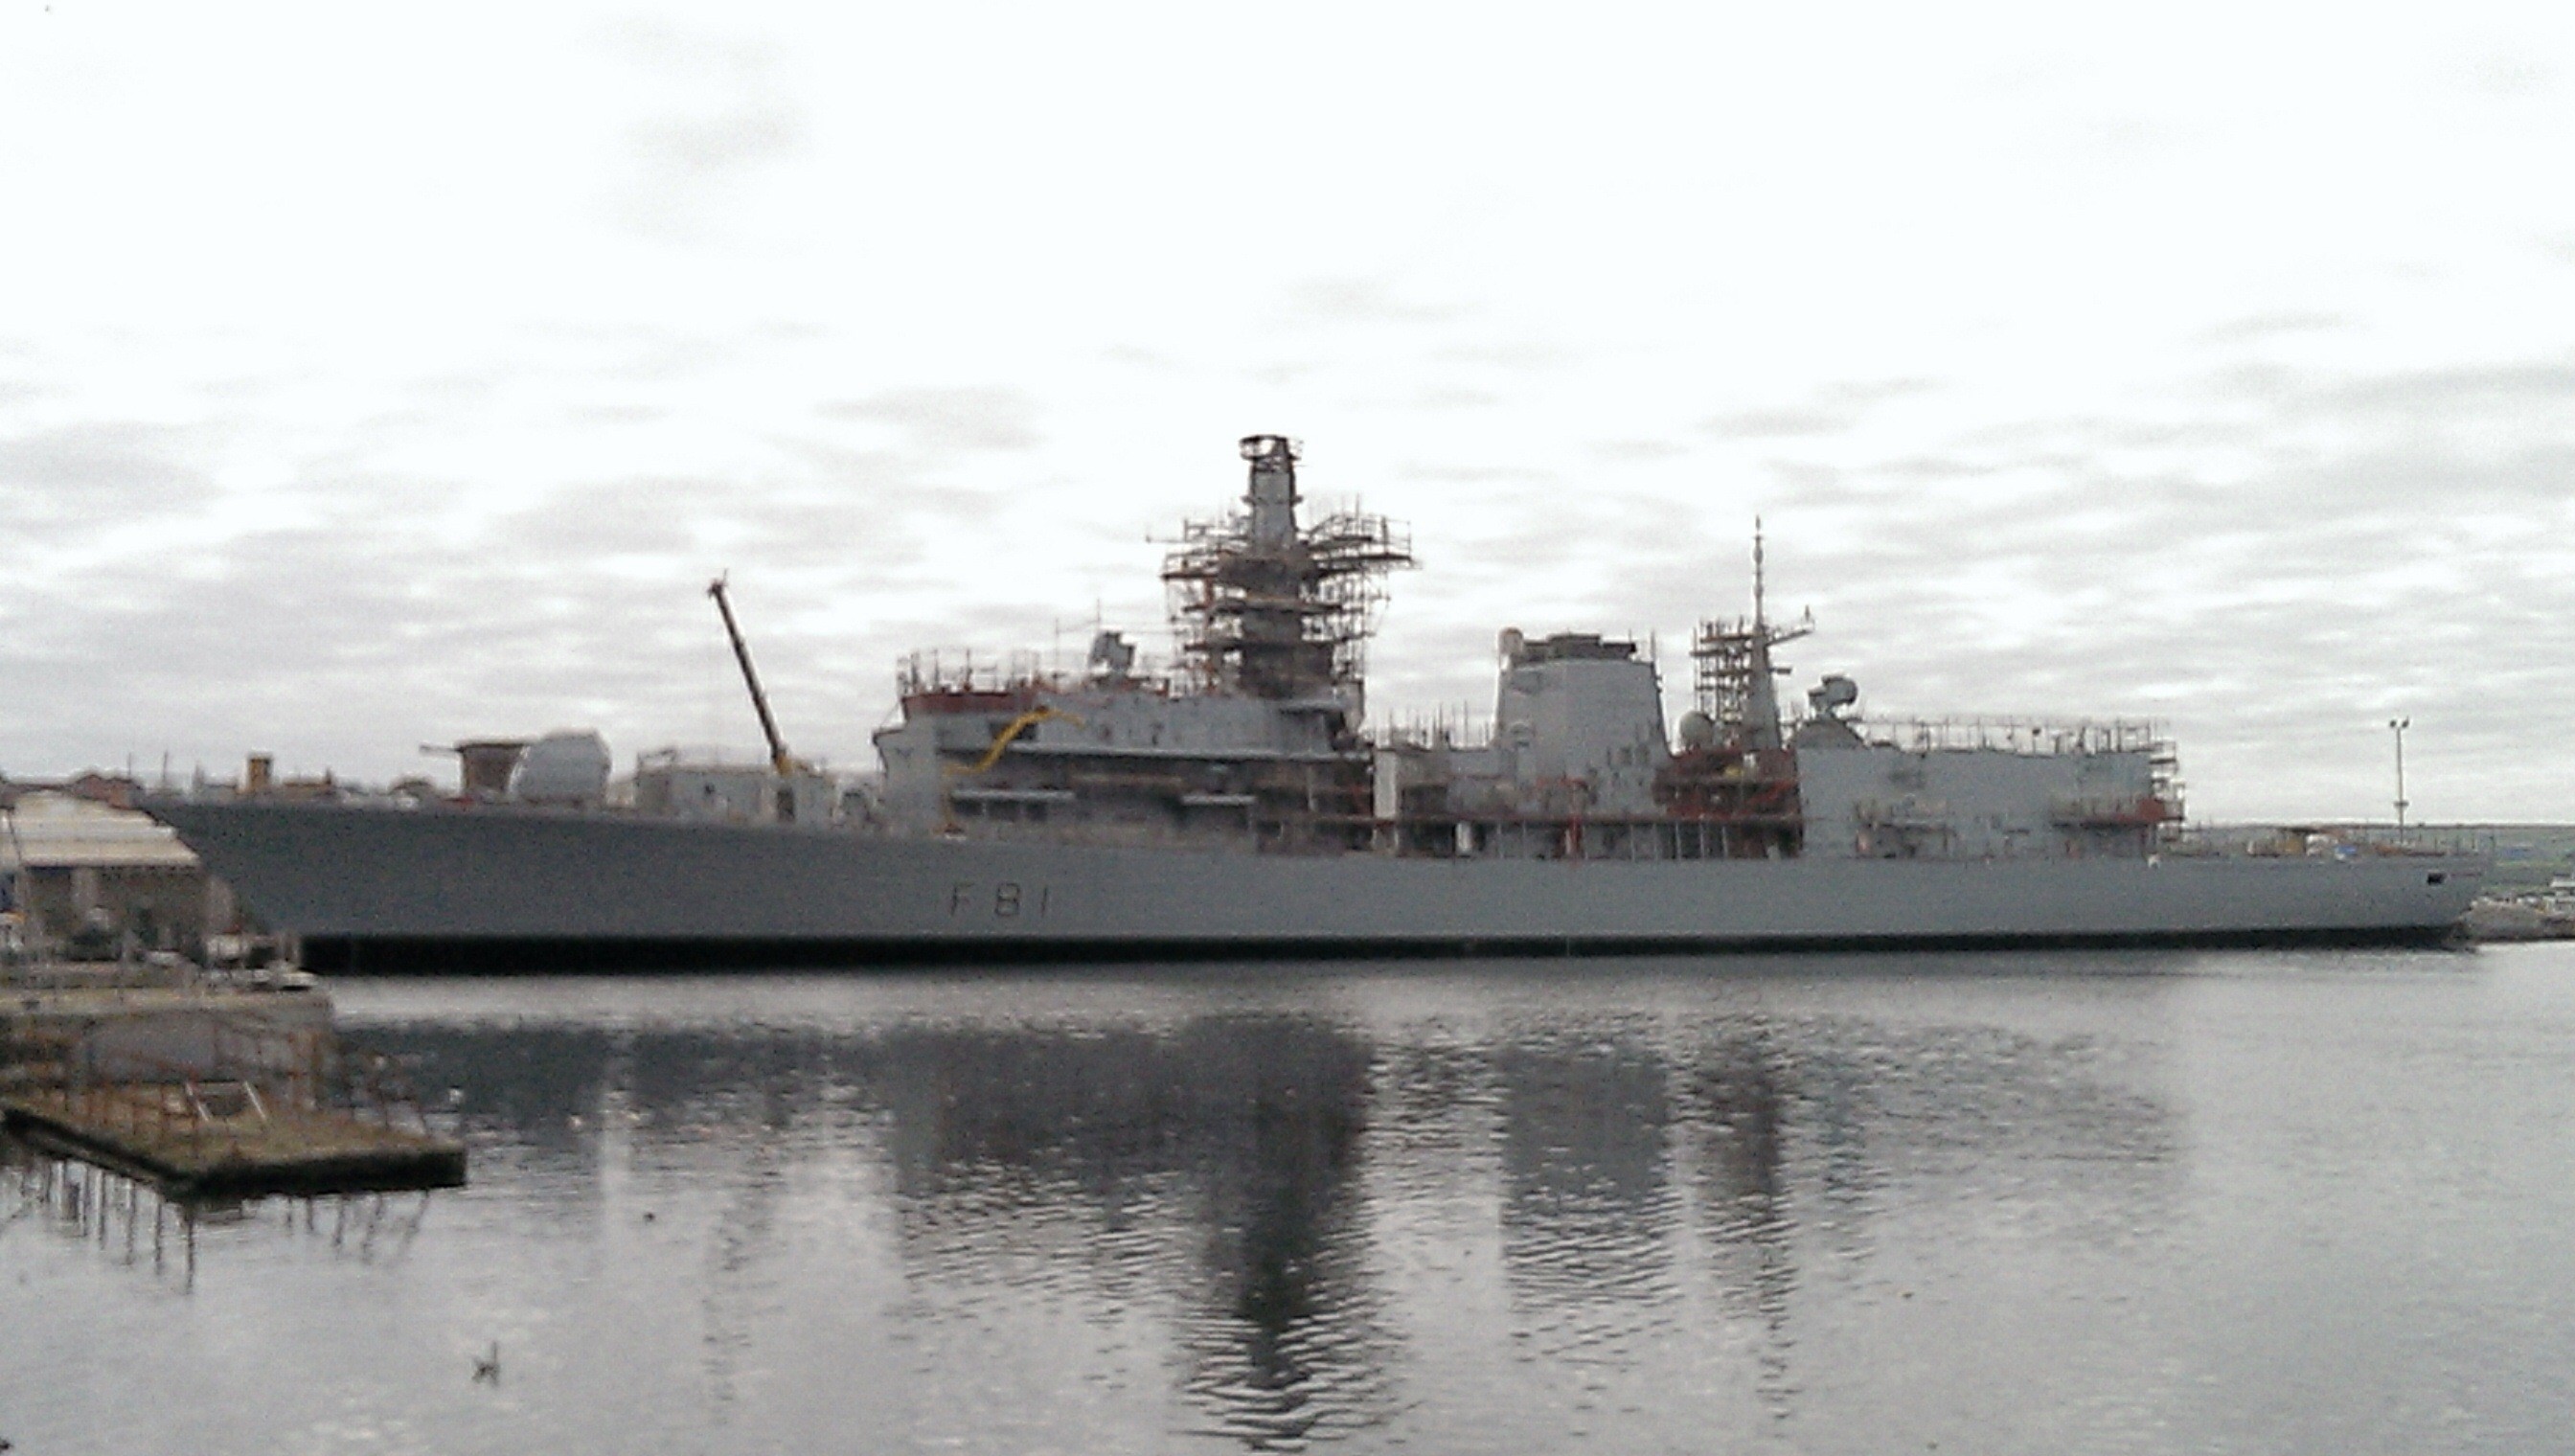 HMS Sutherland